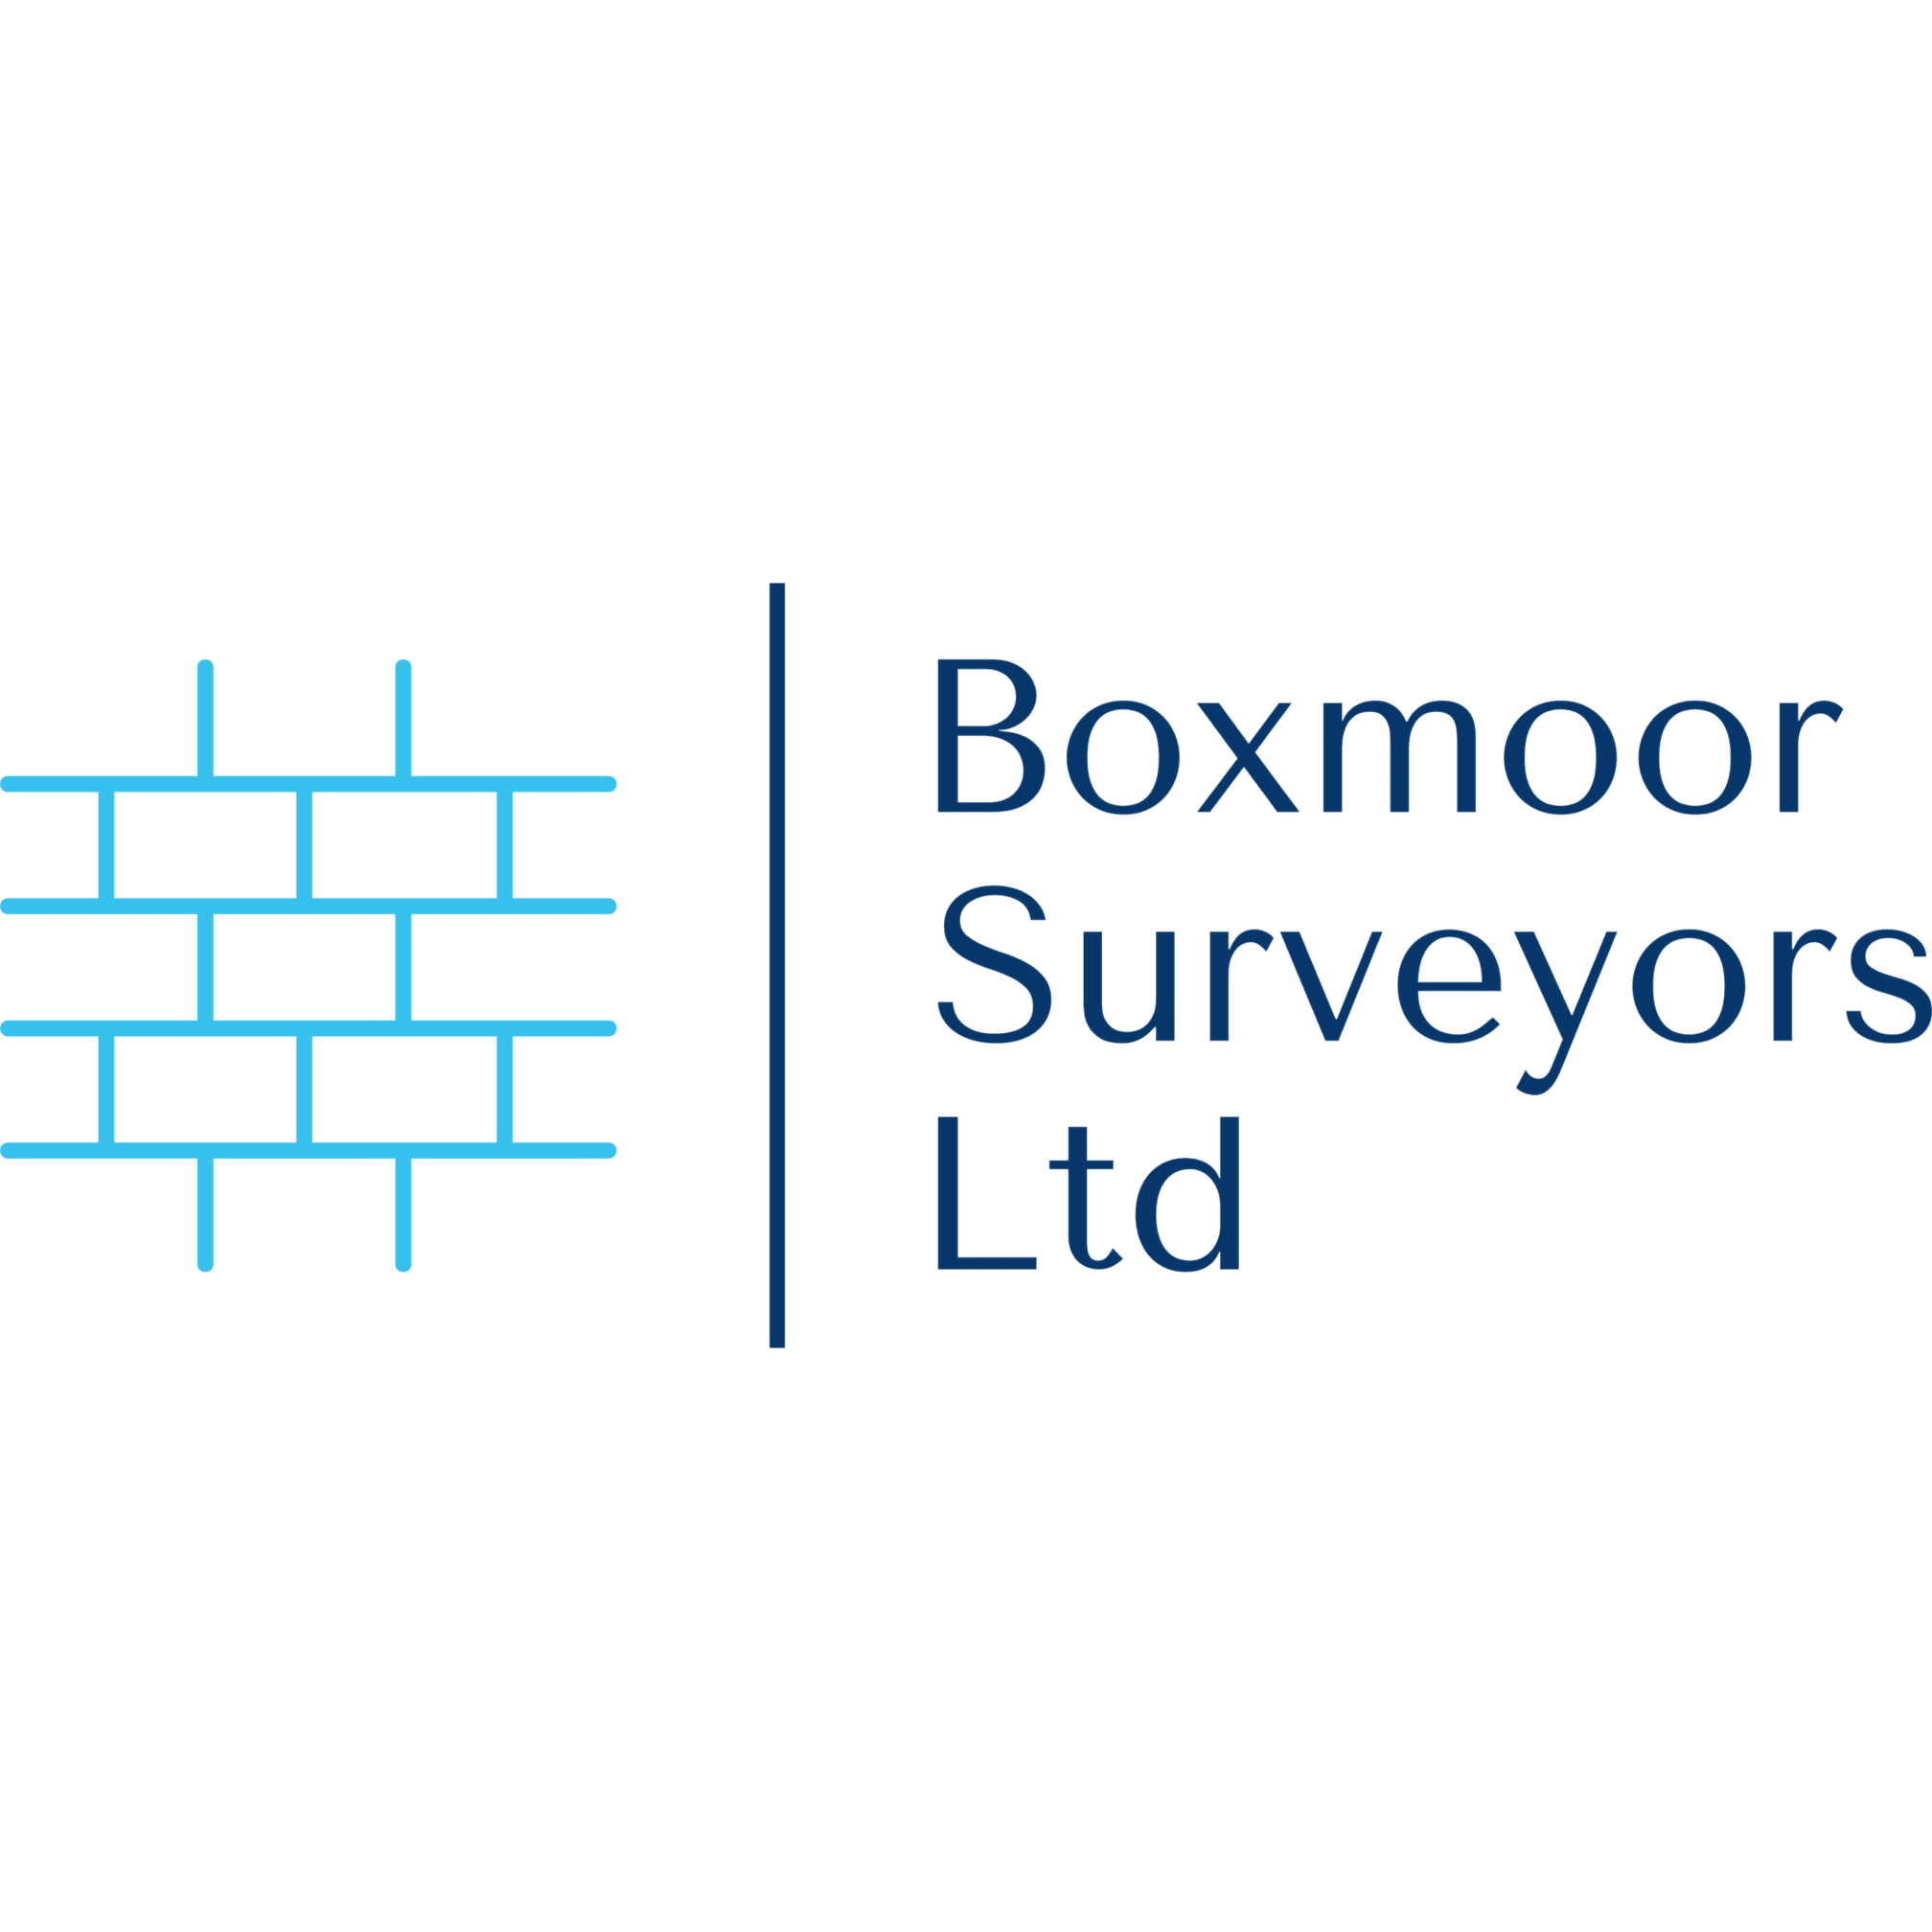 Boxmoor Surveyors Ltd - London, London - 01442 973392 | ShowMeLocal.com